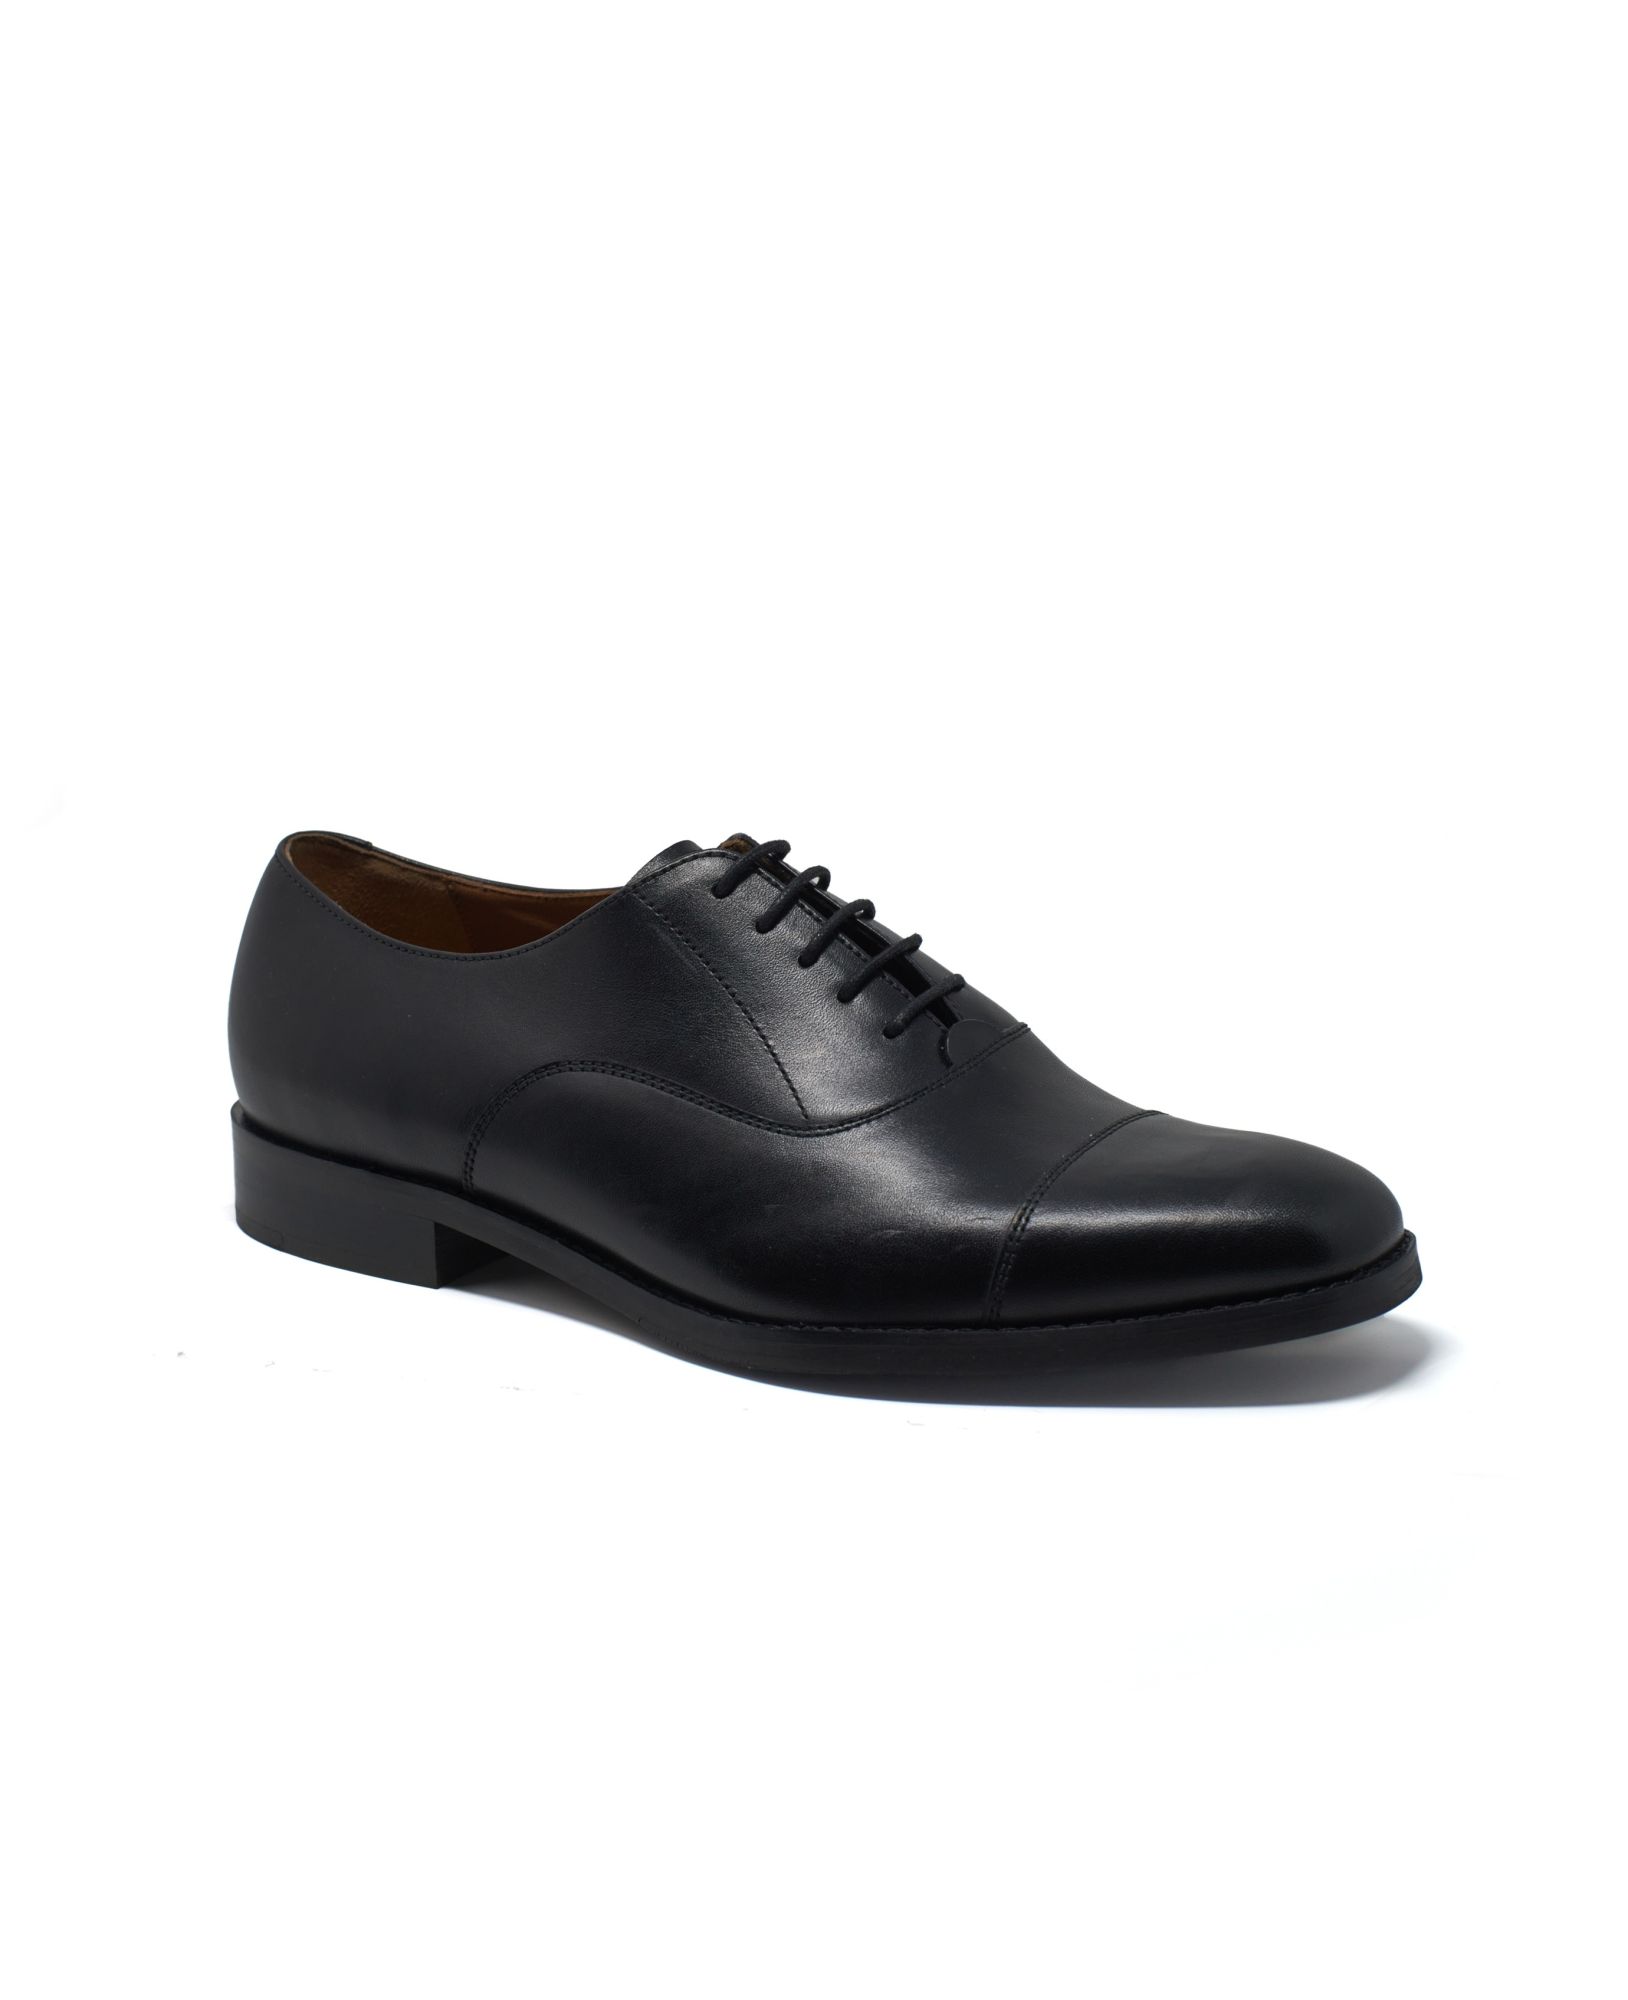 Black Leather Toe Cap Oxford Shoes 9